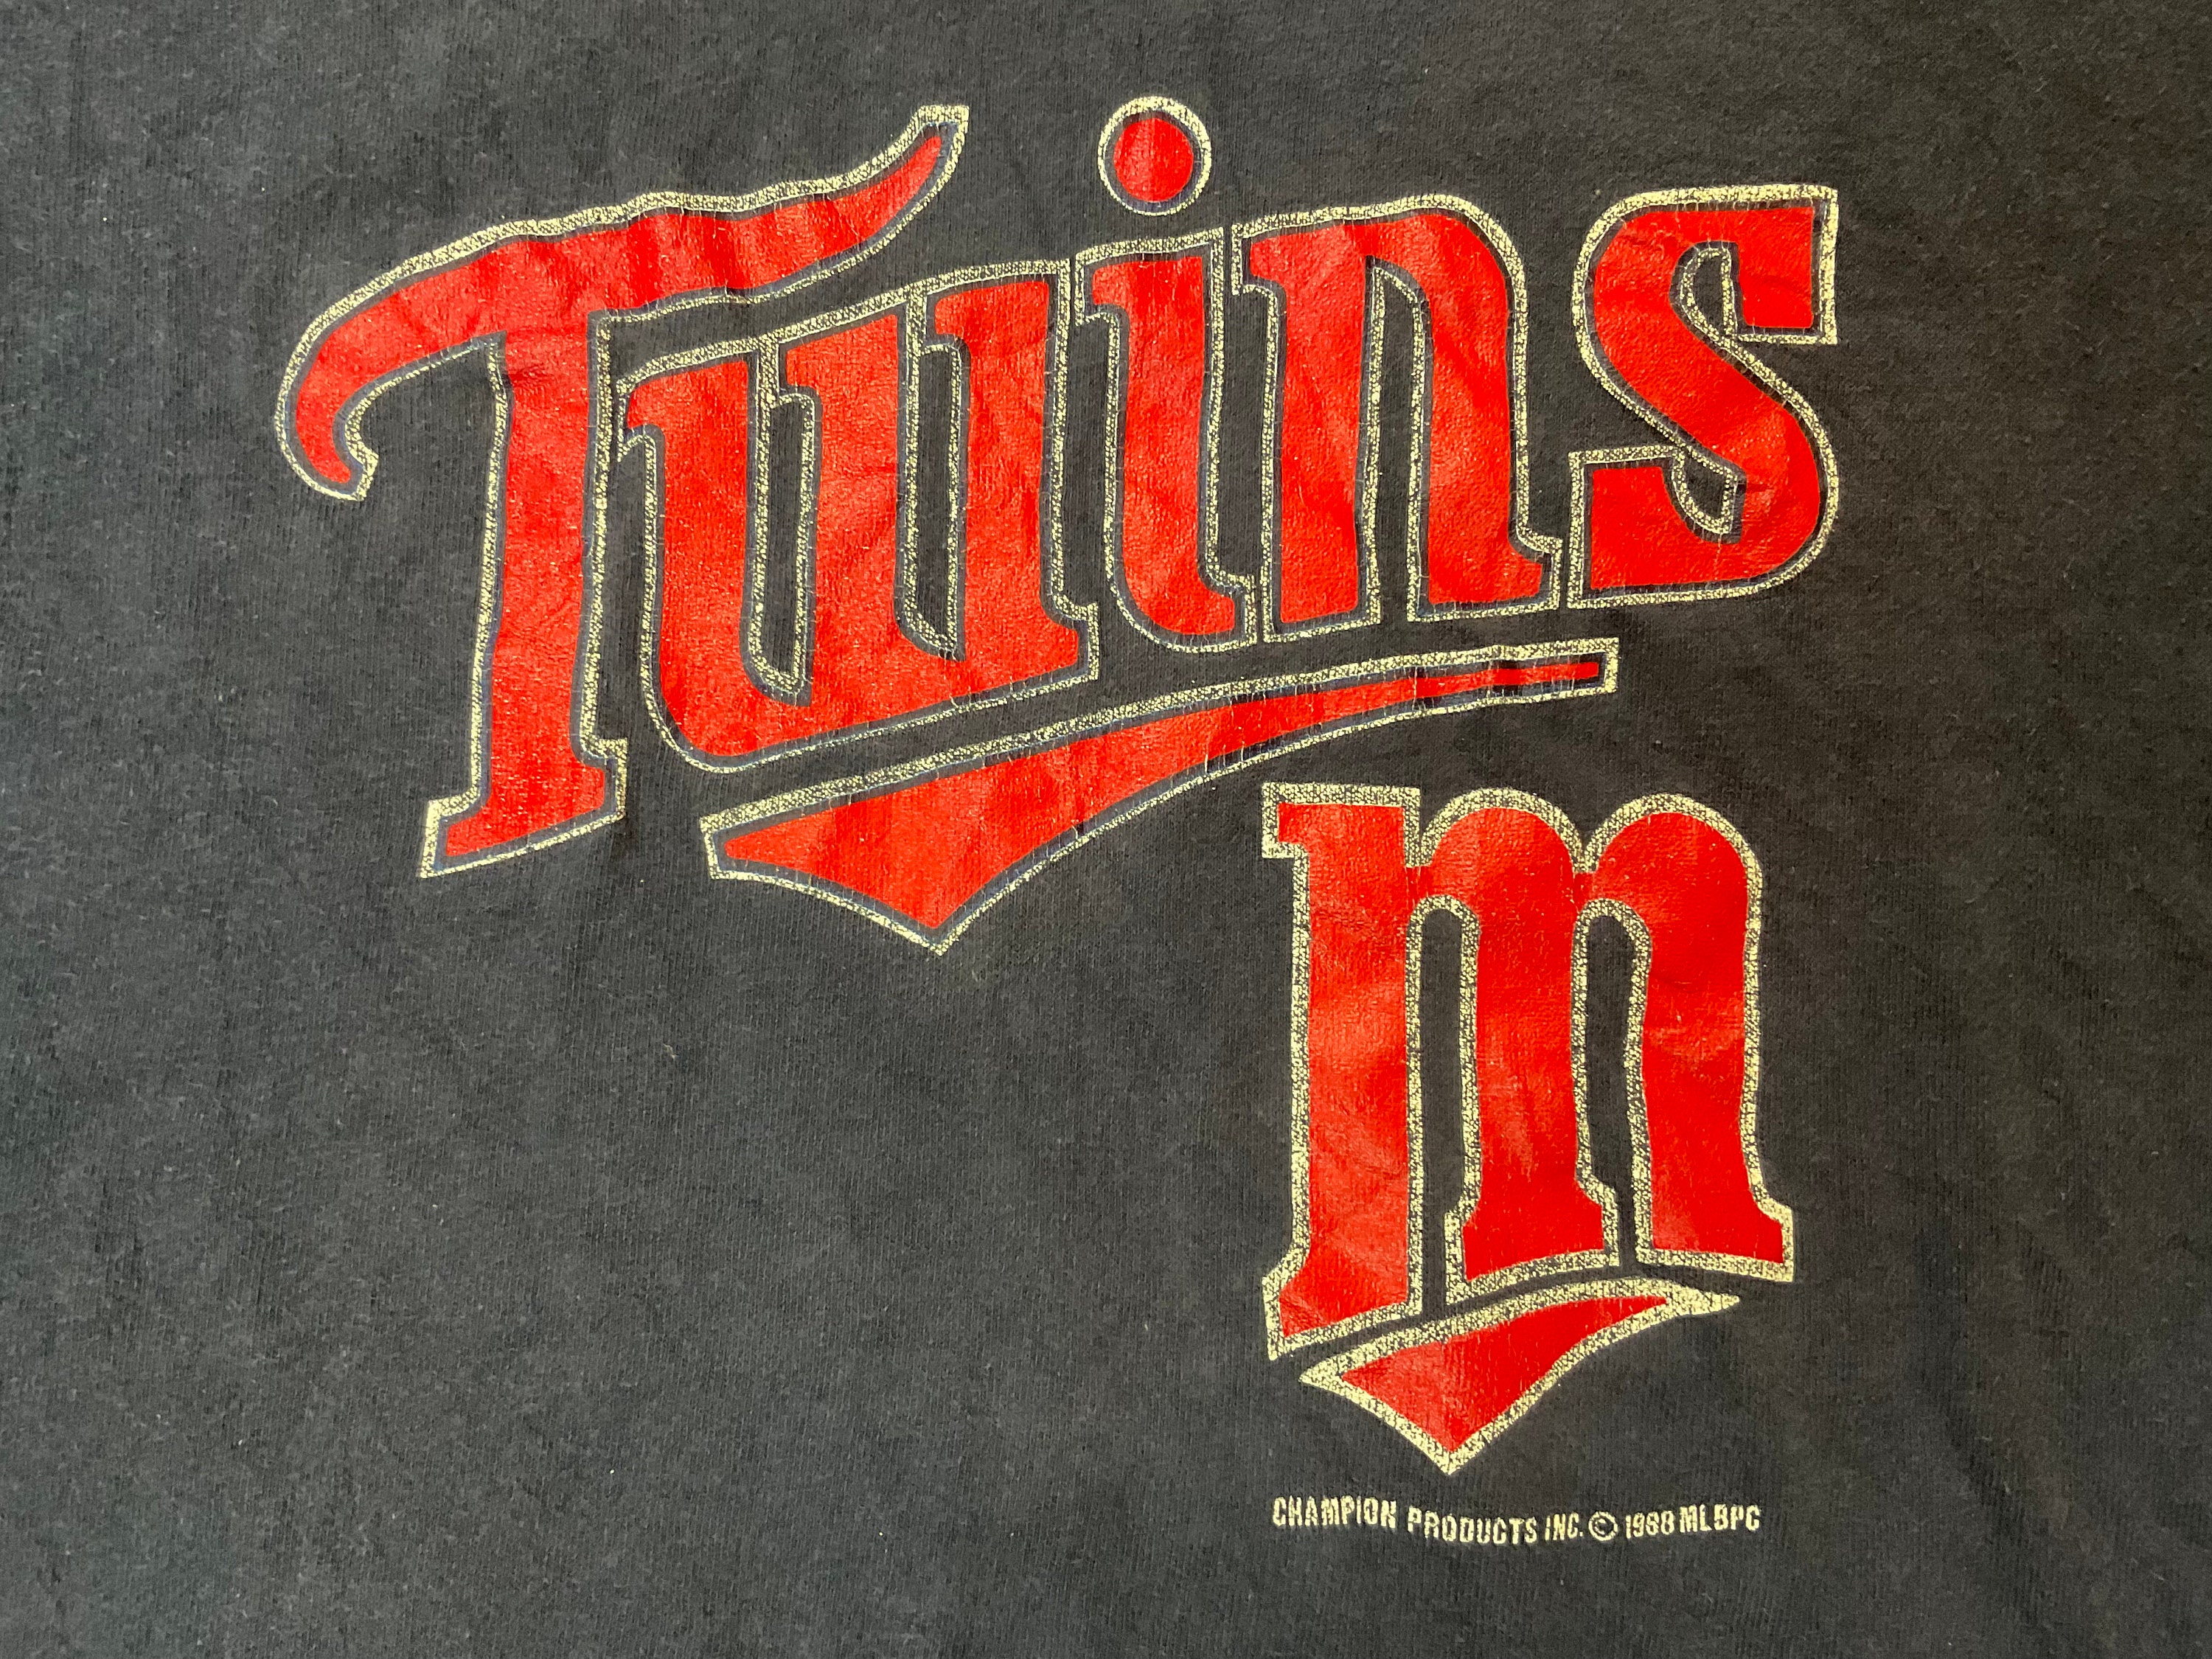 Vintage 80s Minnesota Twins T-shirt M Deadstock Champion Baseball Mesh 2  tone